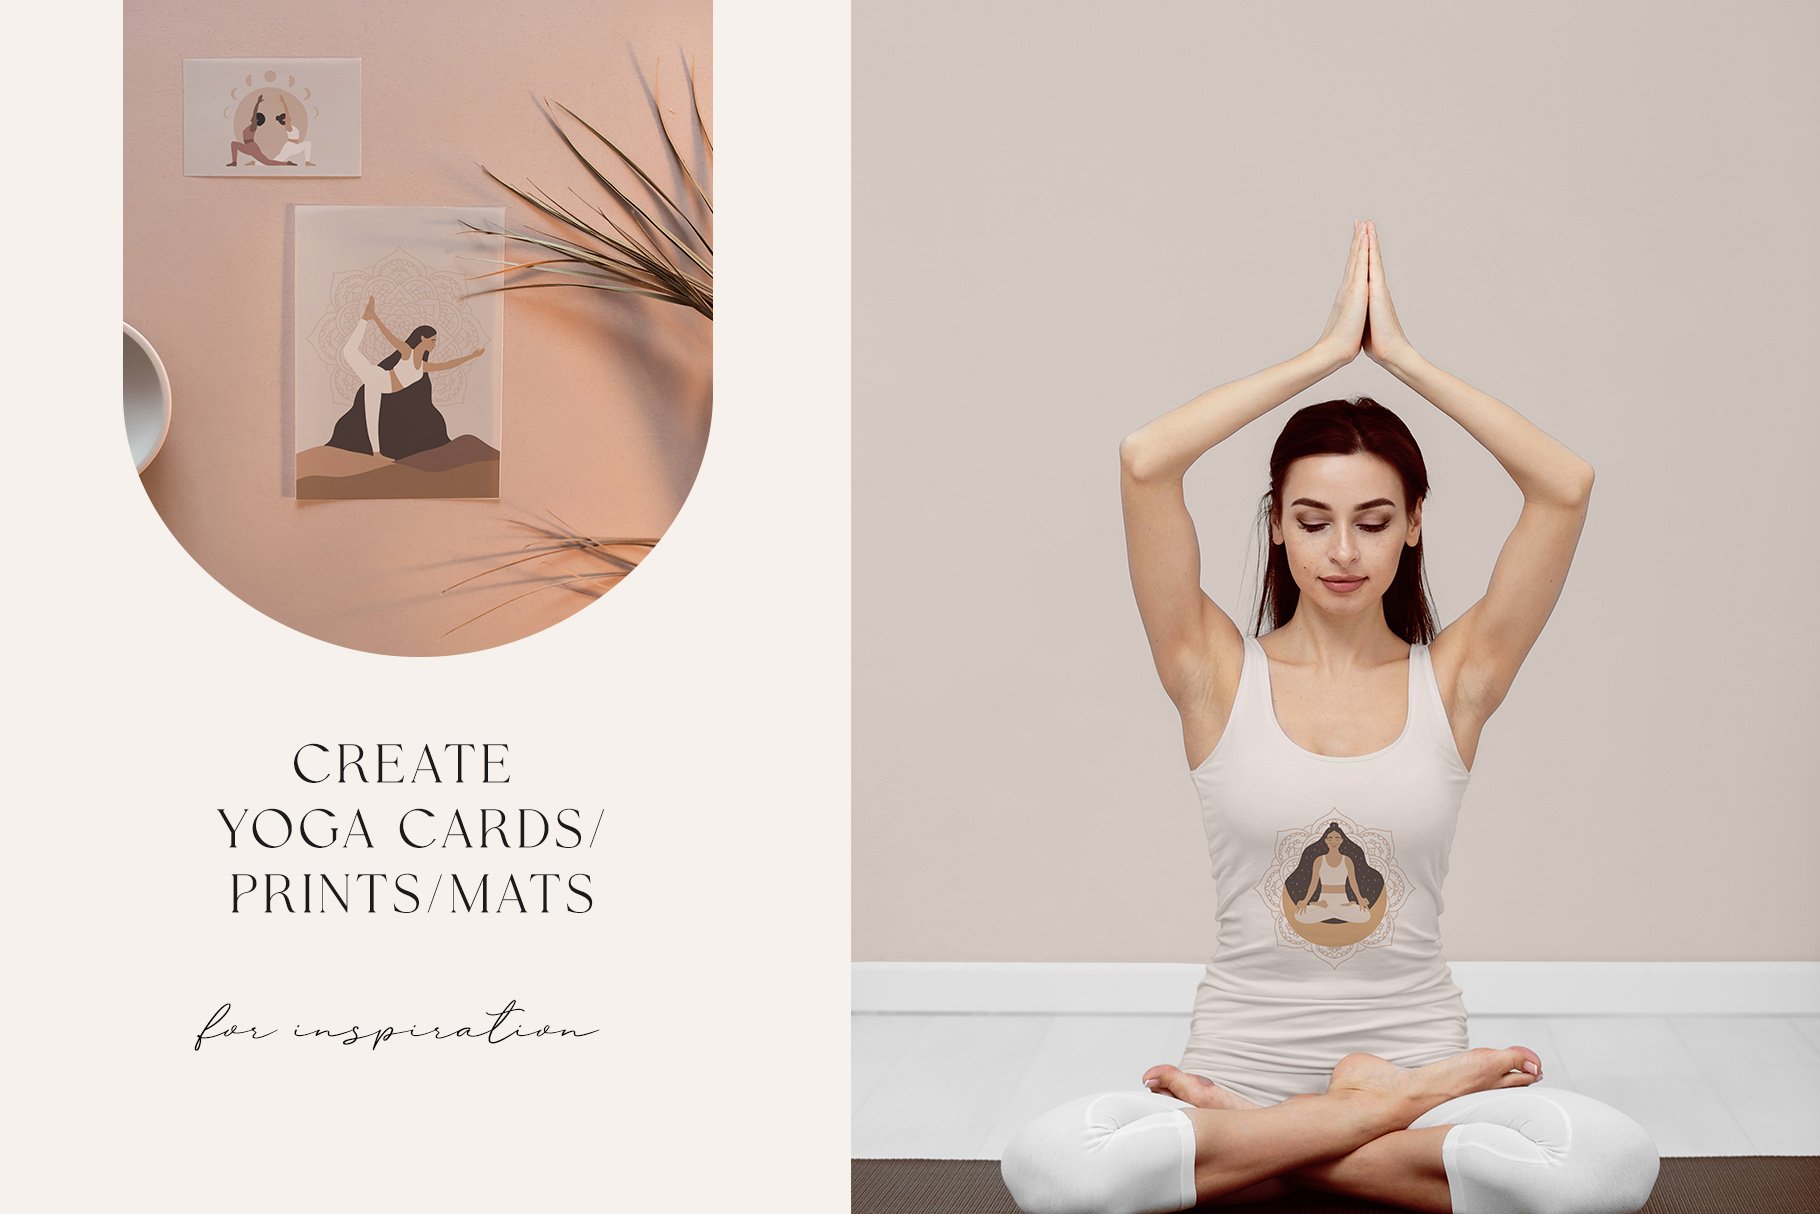 Create yoga cards, prints, mats.